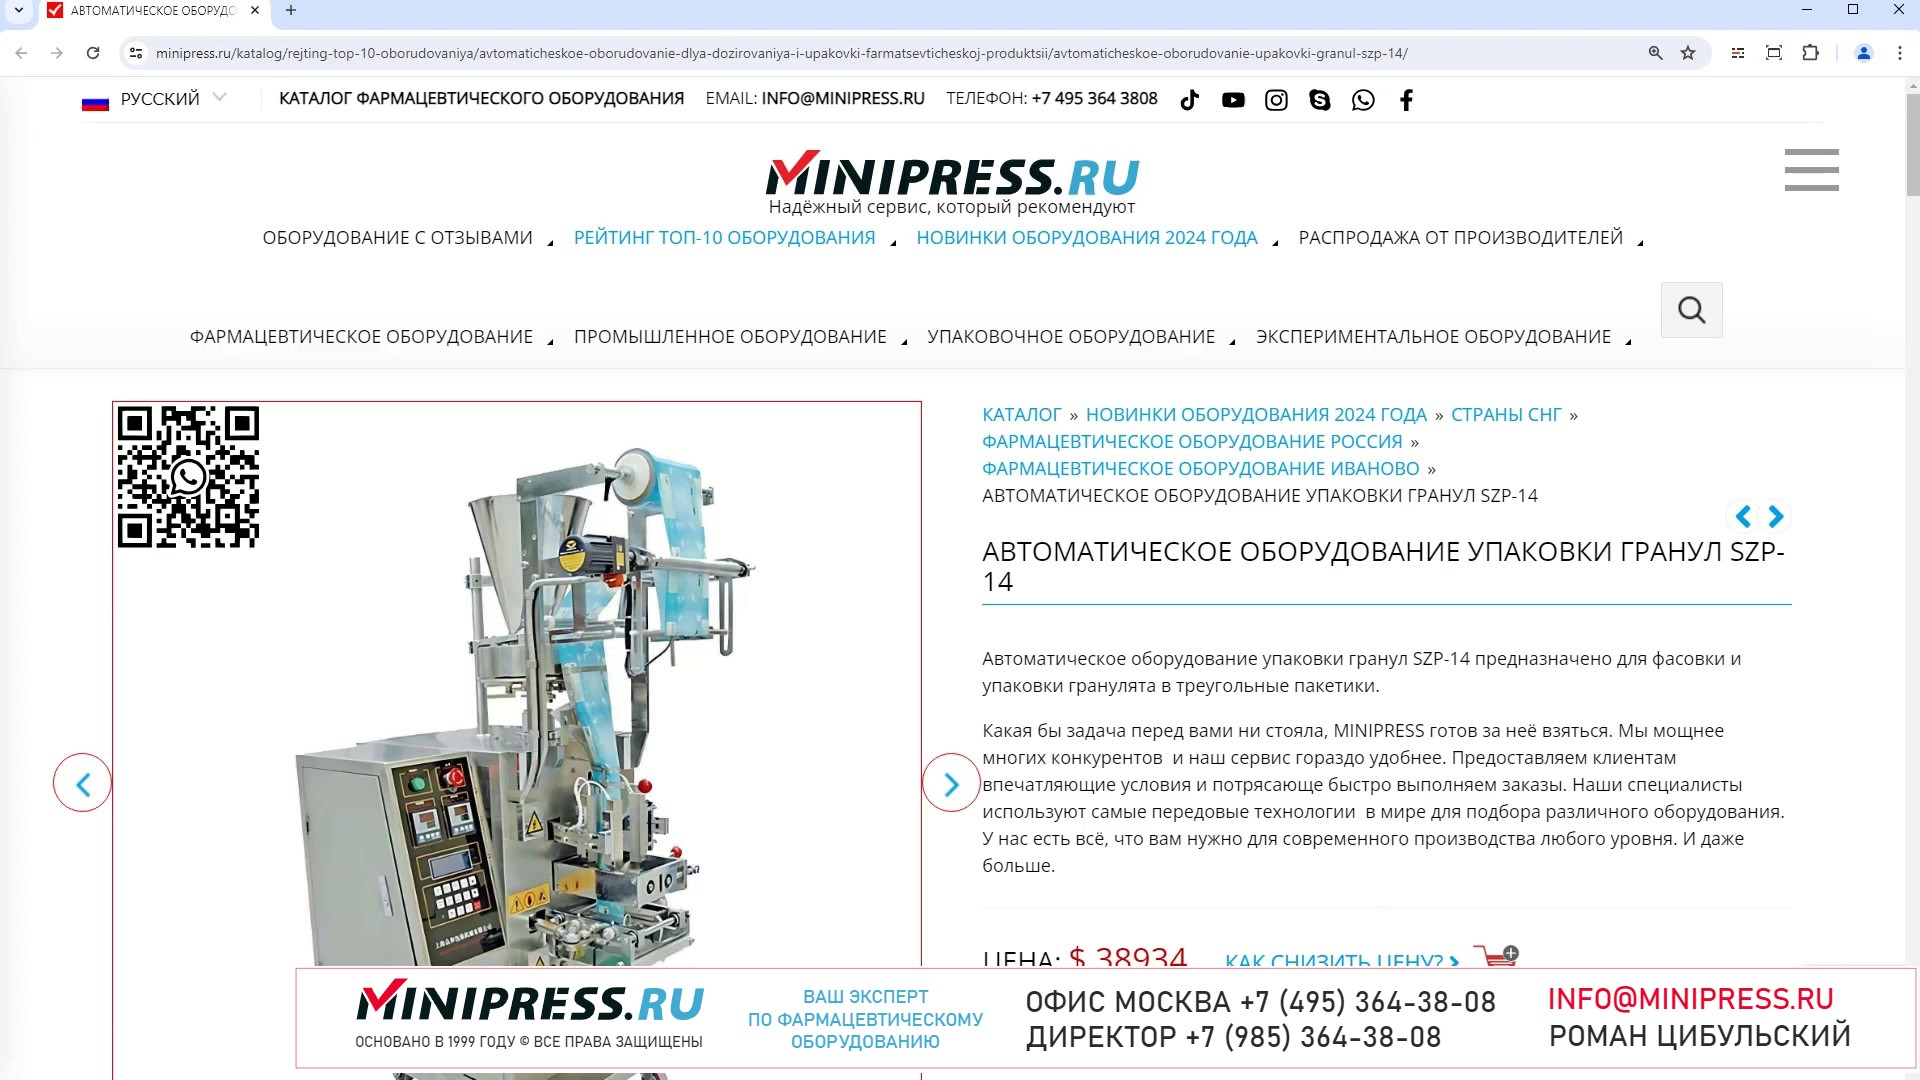 Minipress.ru Автоматическое оборудование упаковки гранул SZP-14